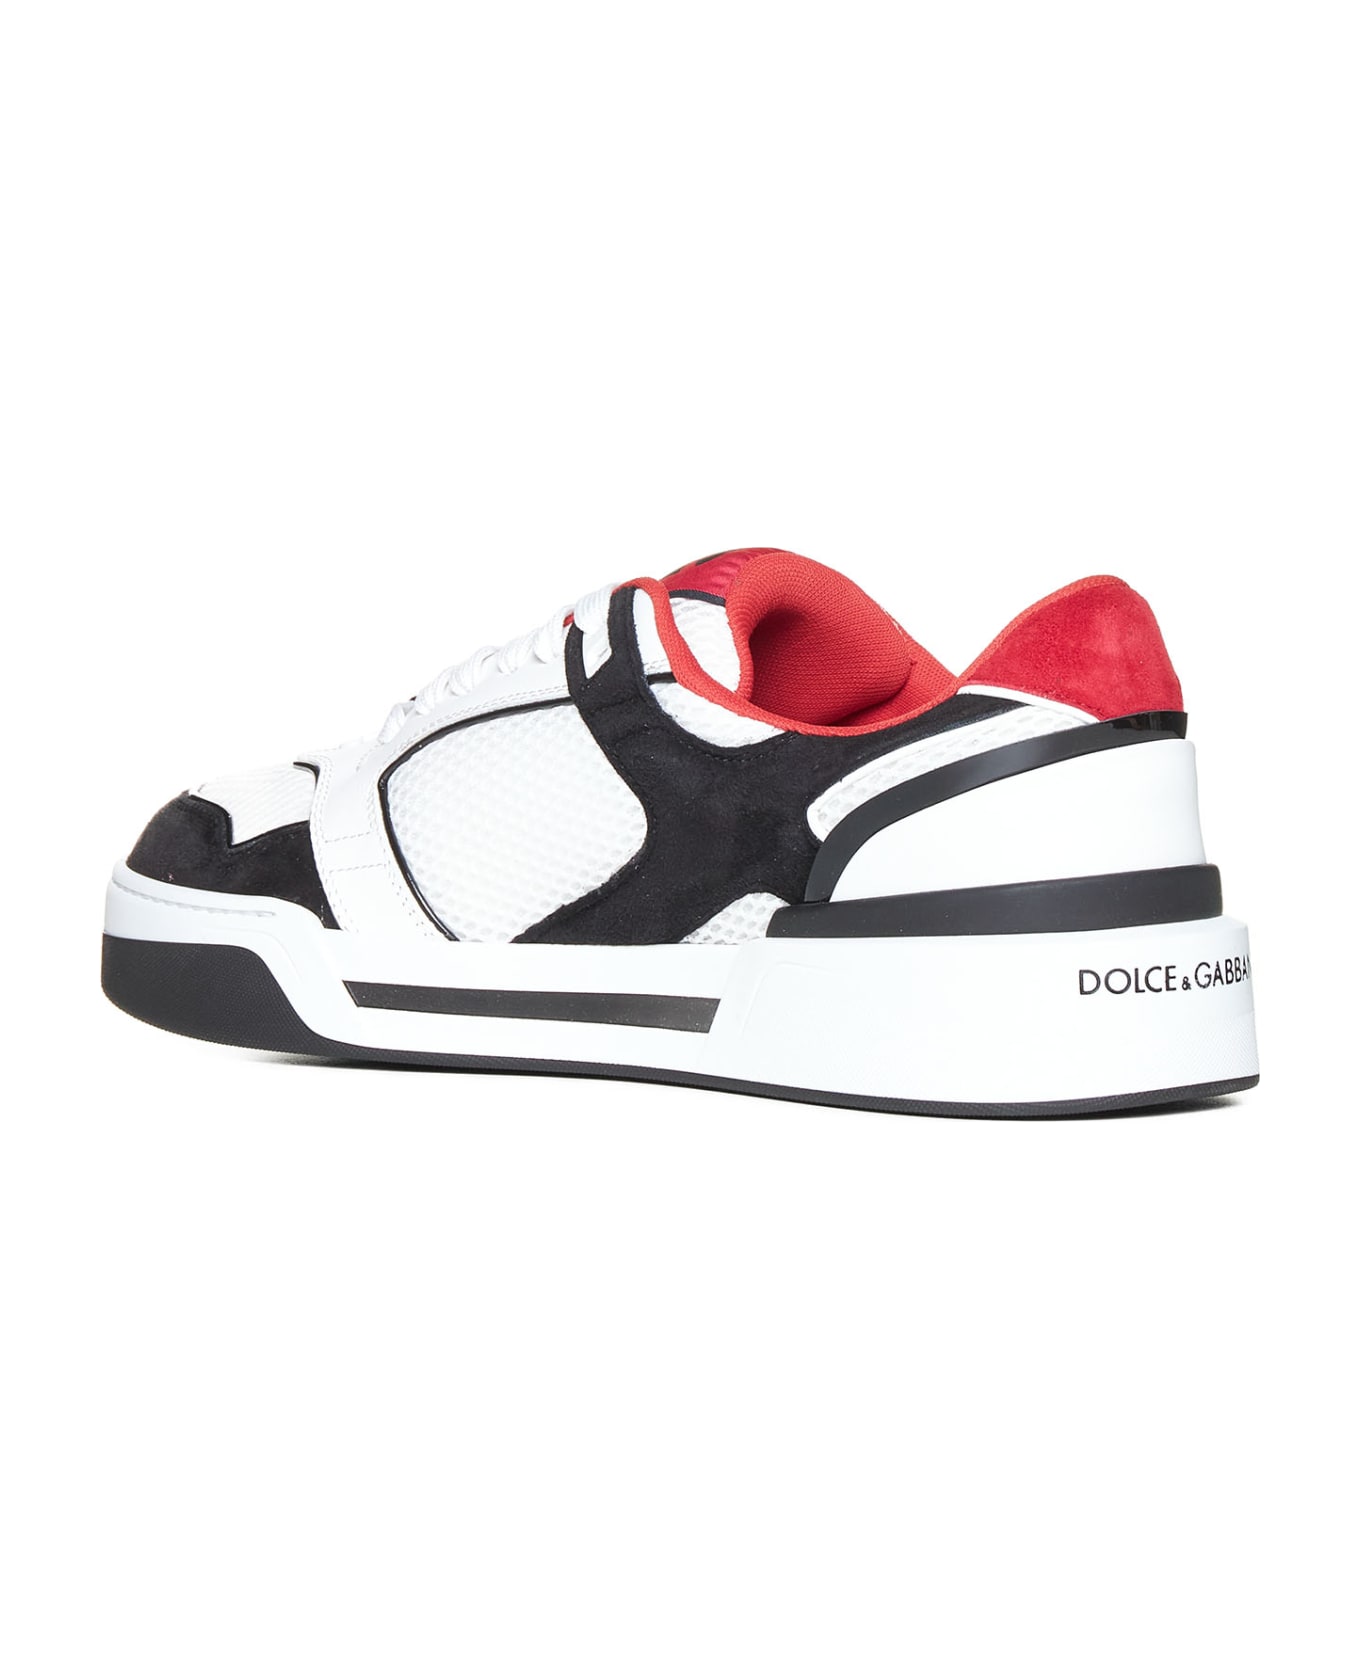 Dolce & Gabbana New Roma Sneakers - Nero/bianco